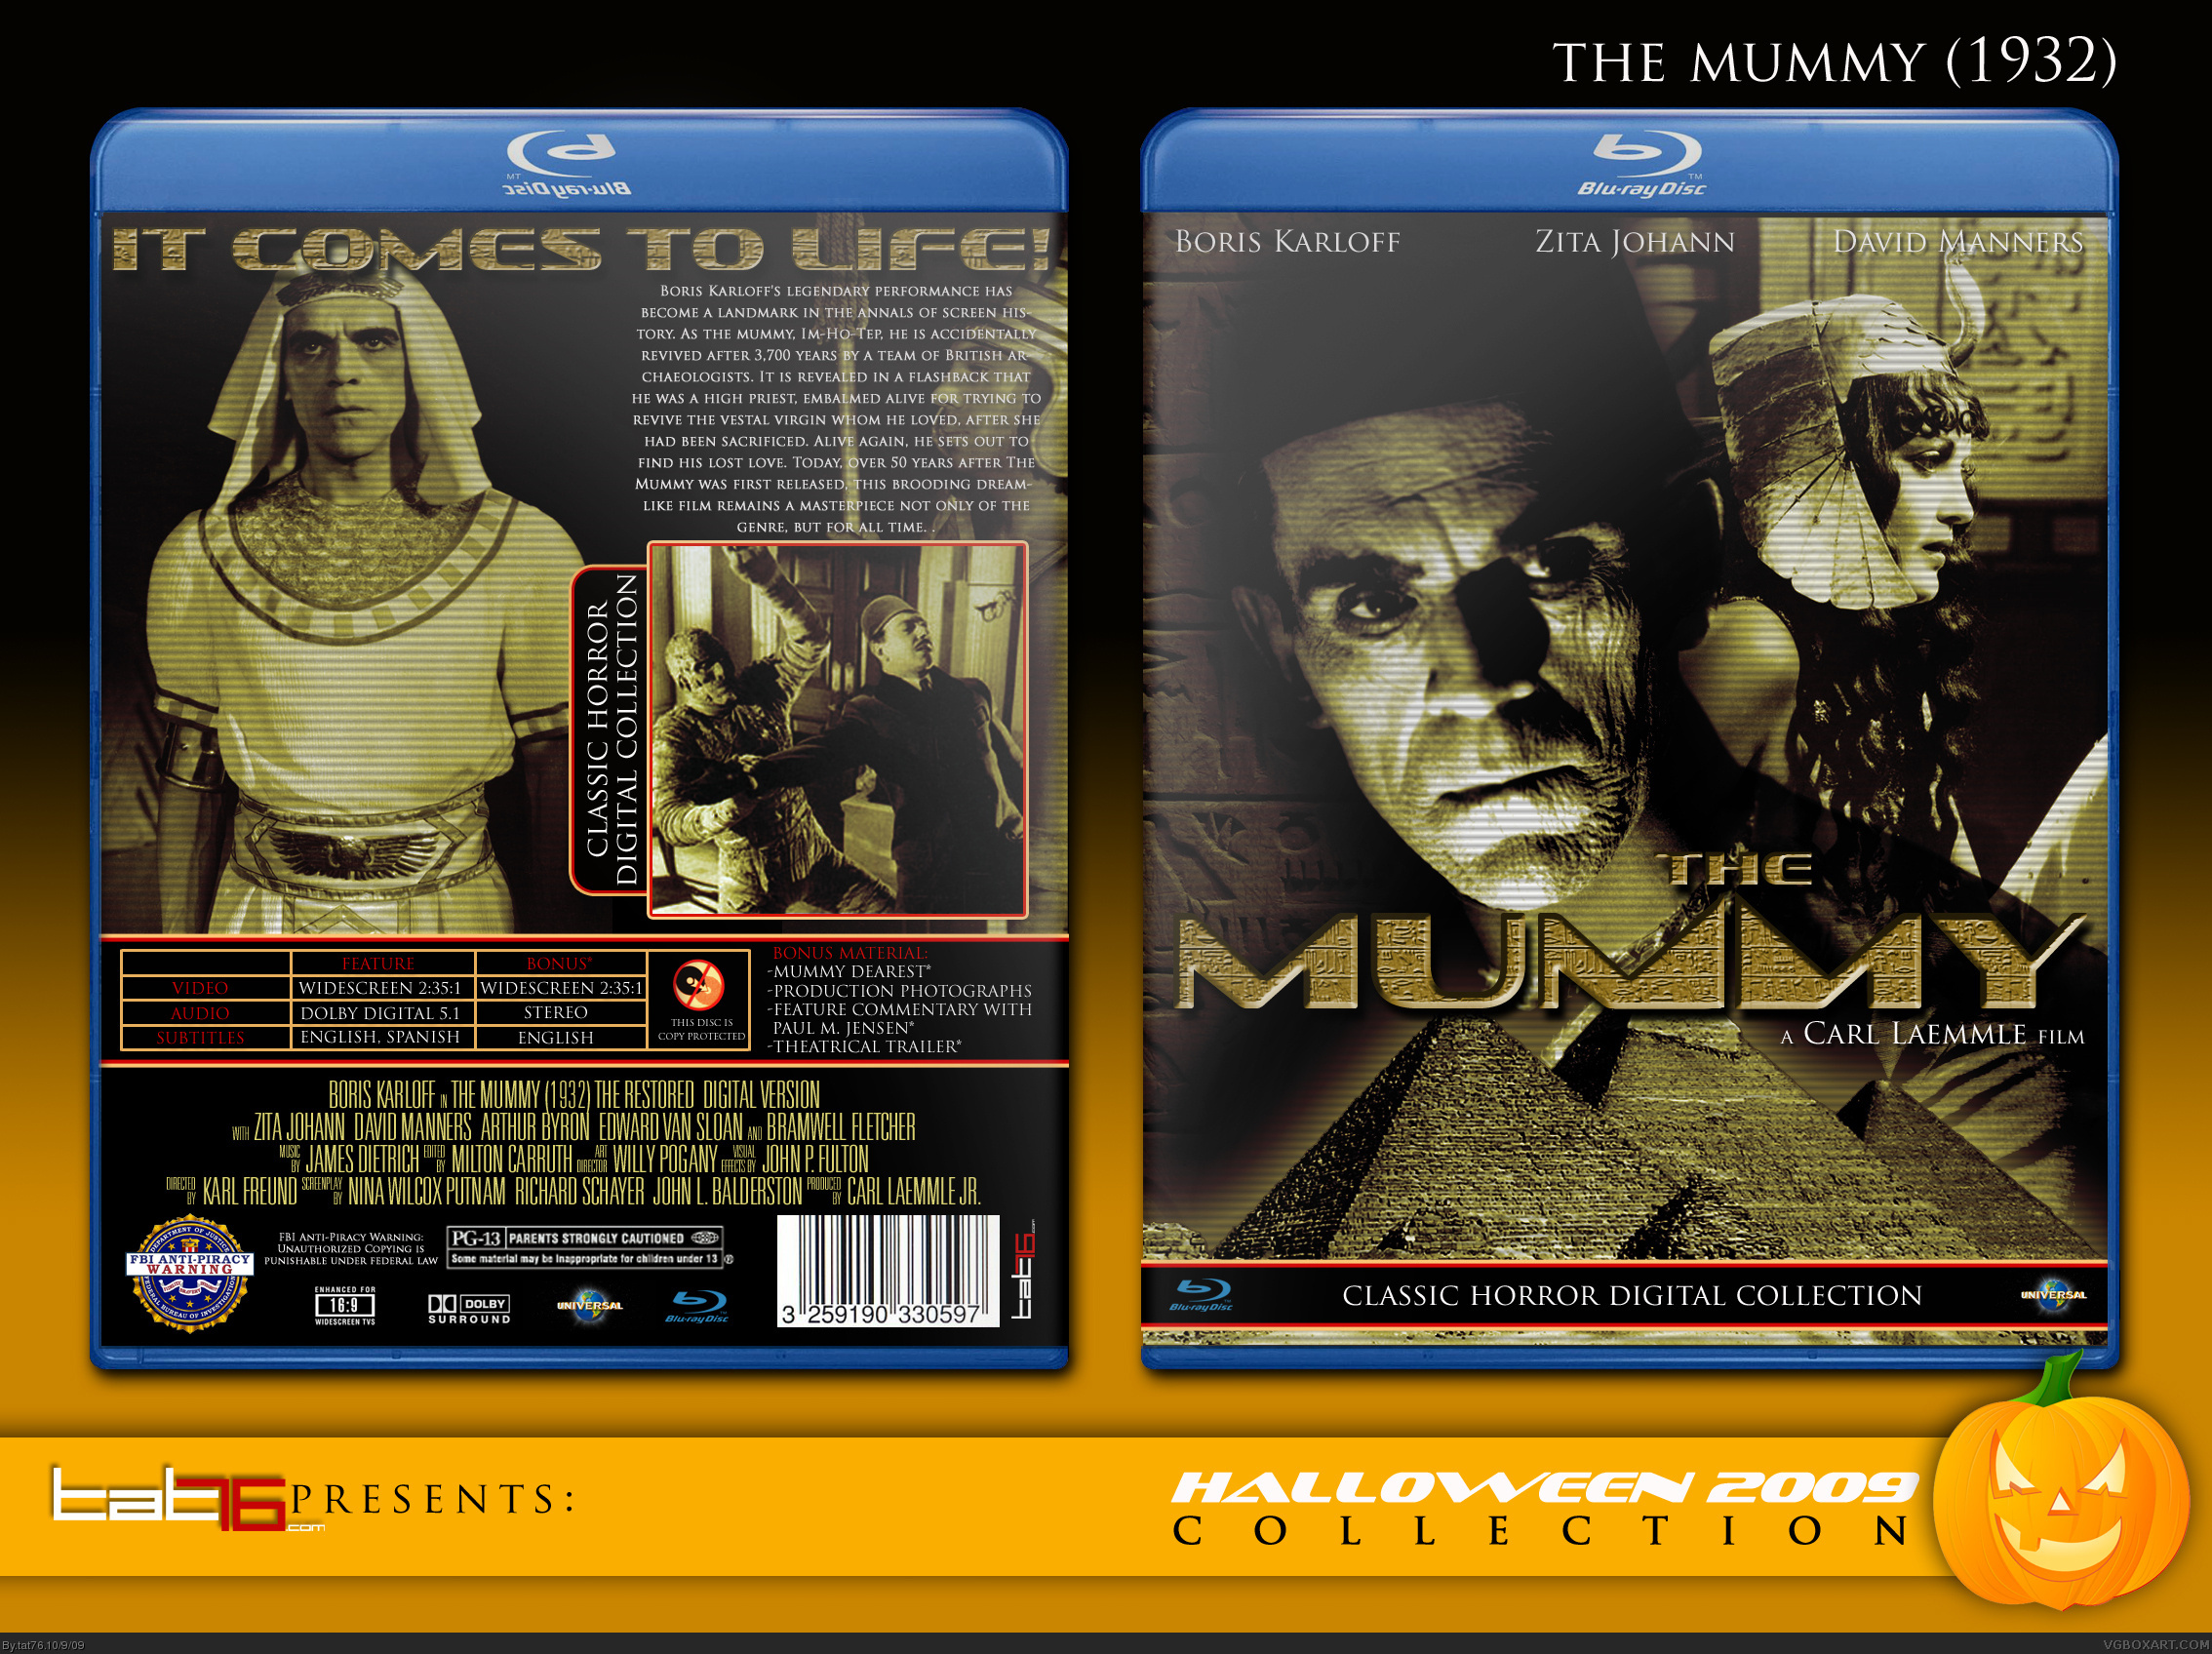 The Mummy (1932) box cover